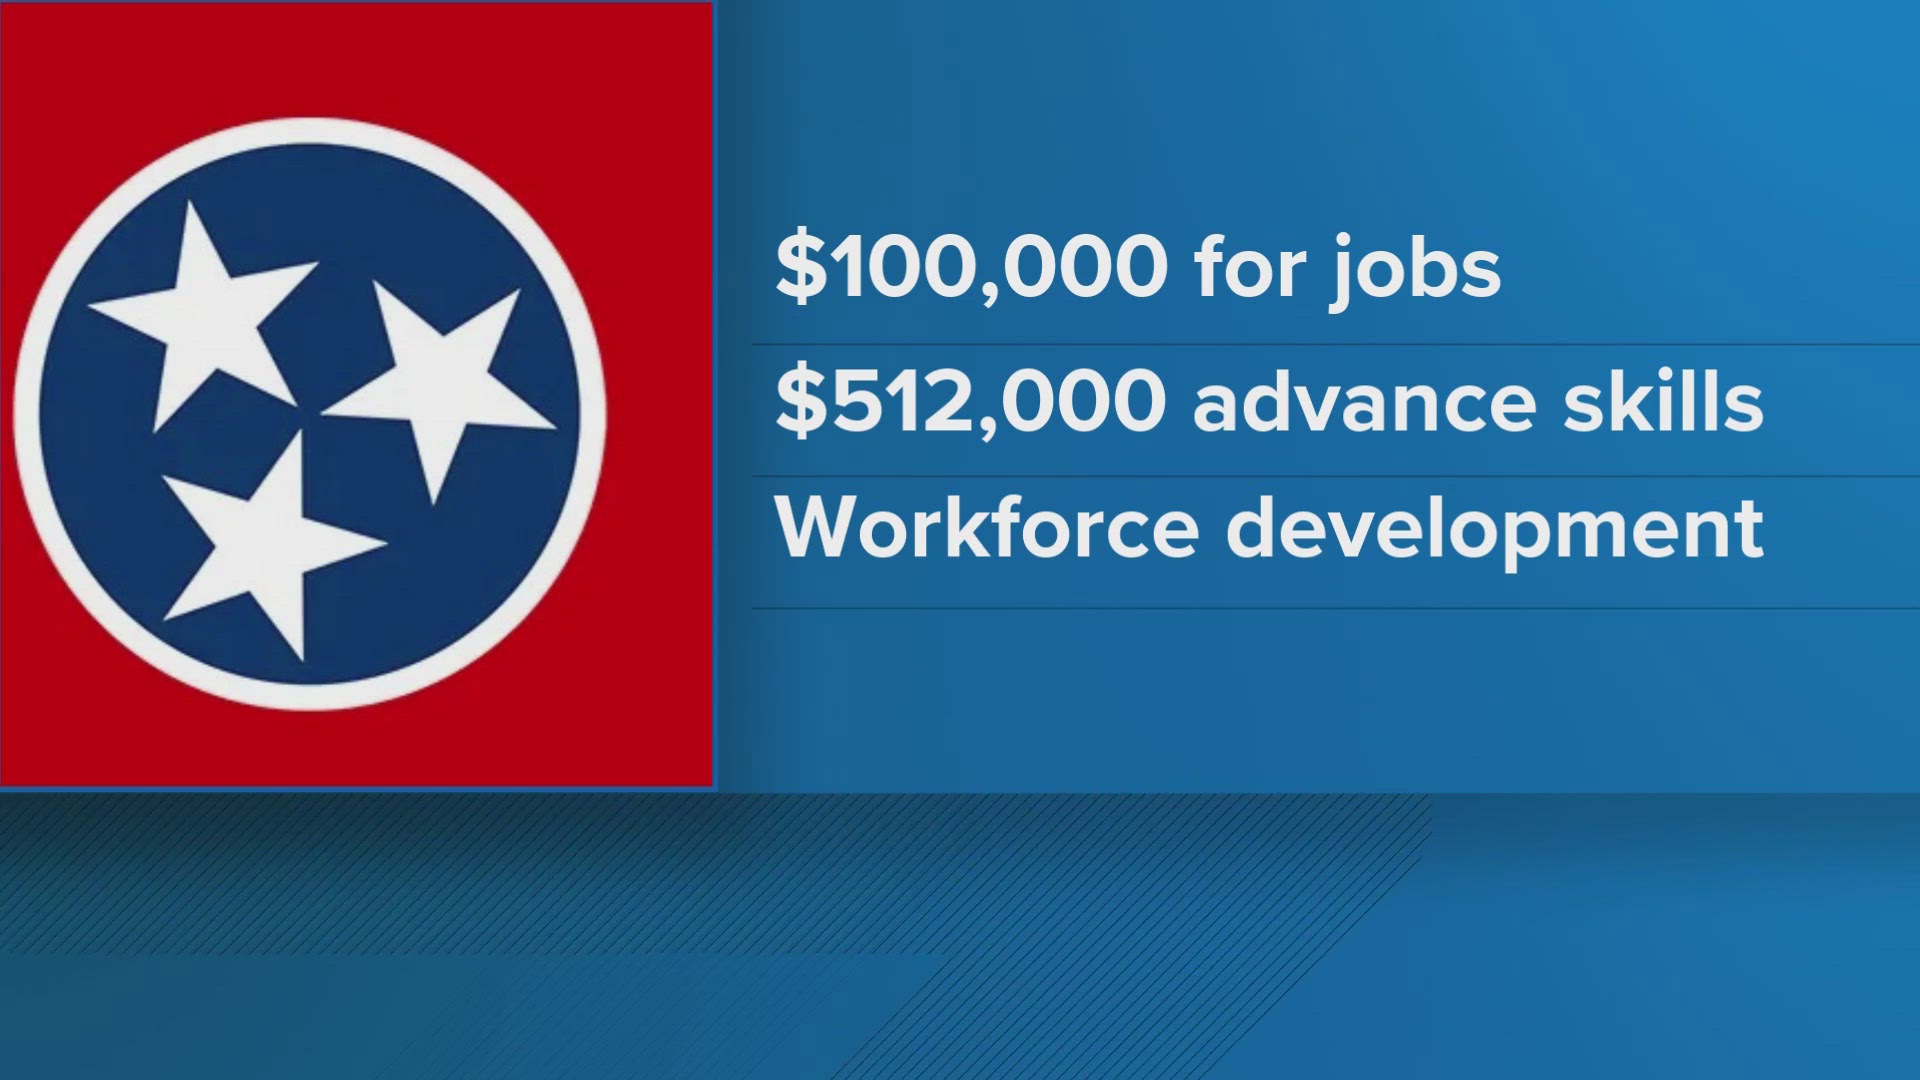 State Representative John Ragan said the money will expand broadband and enhance workforce development.